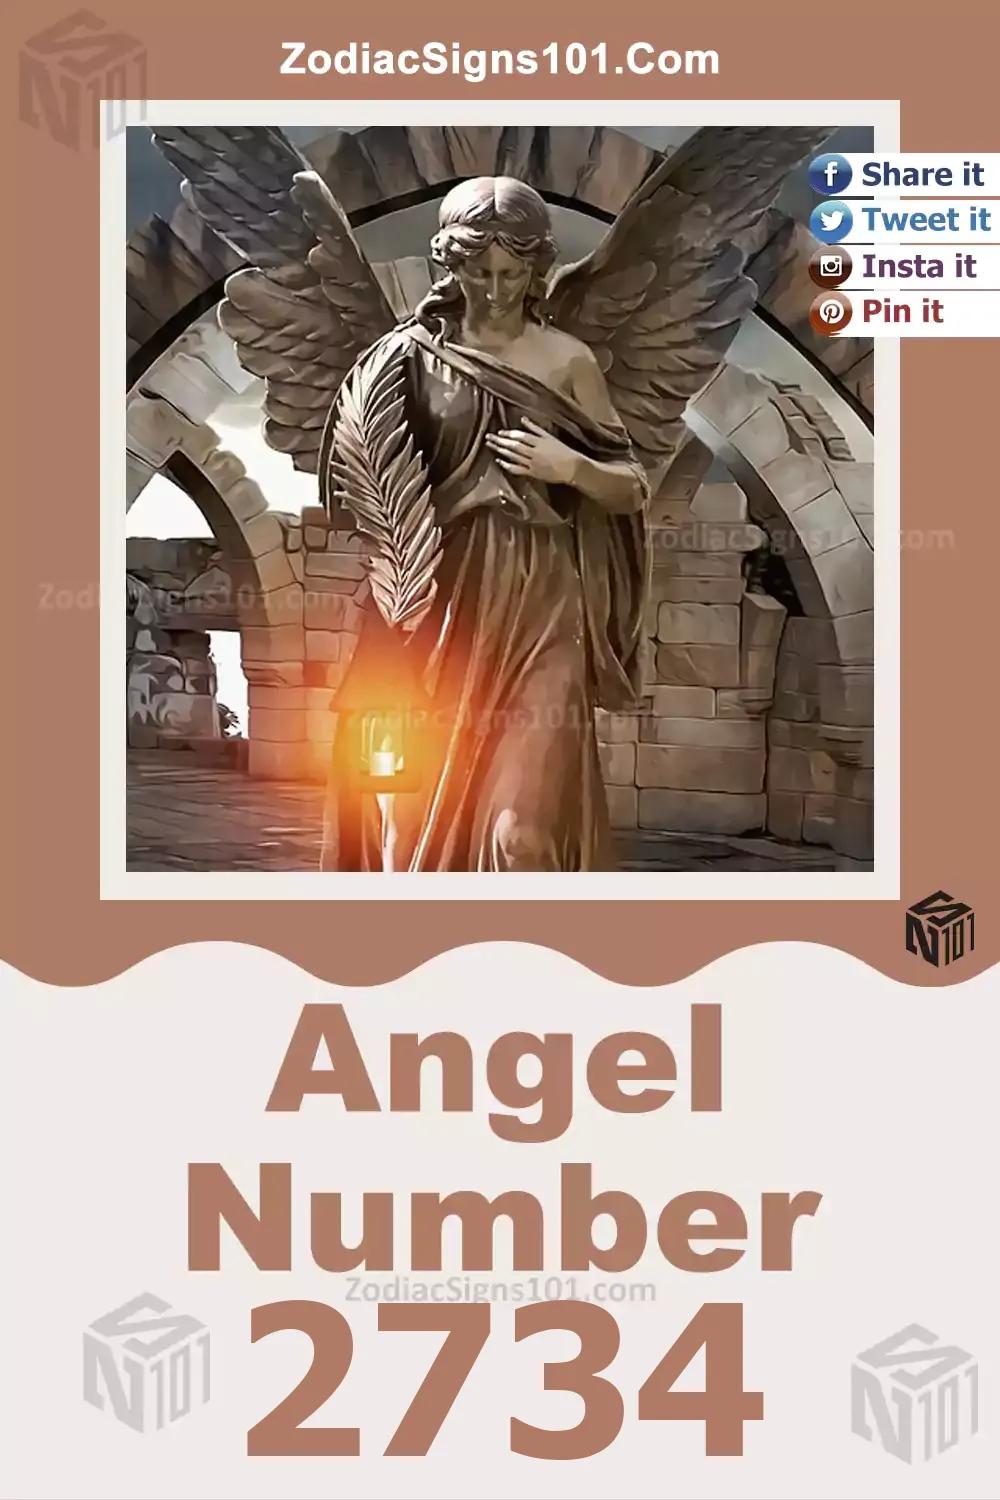 2734-Angel-Number-Meaning.jpg